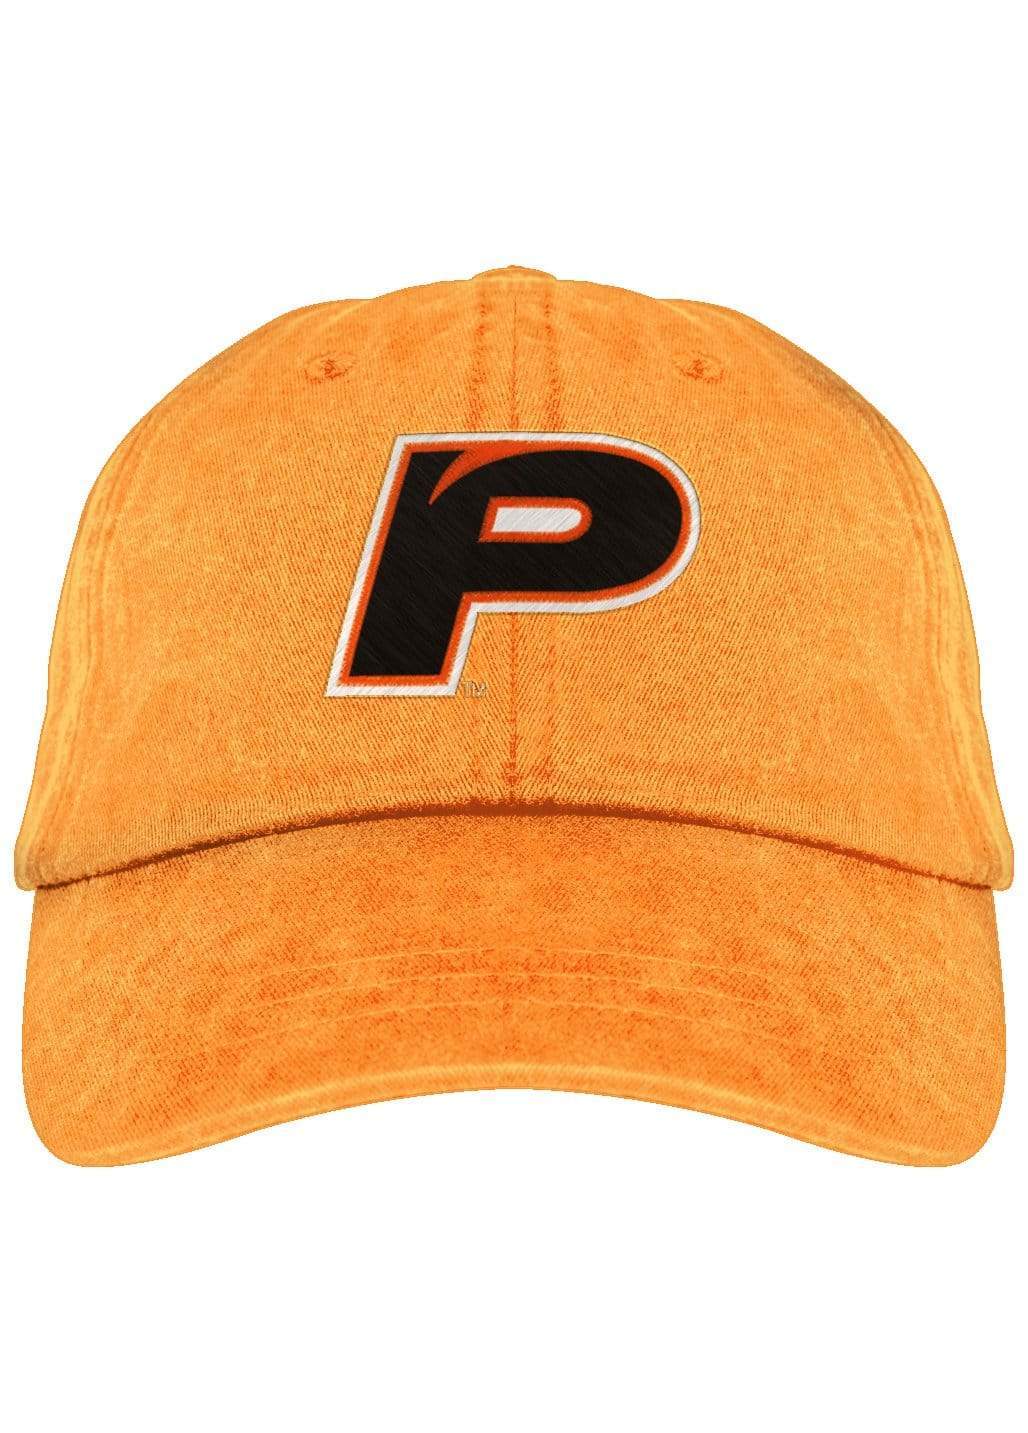 University of the Pacific Tigers Pacific Athletics P Fadeaway Cap Hat by Zeus Collegiate